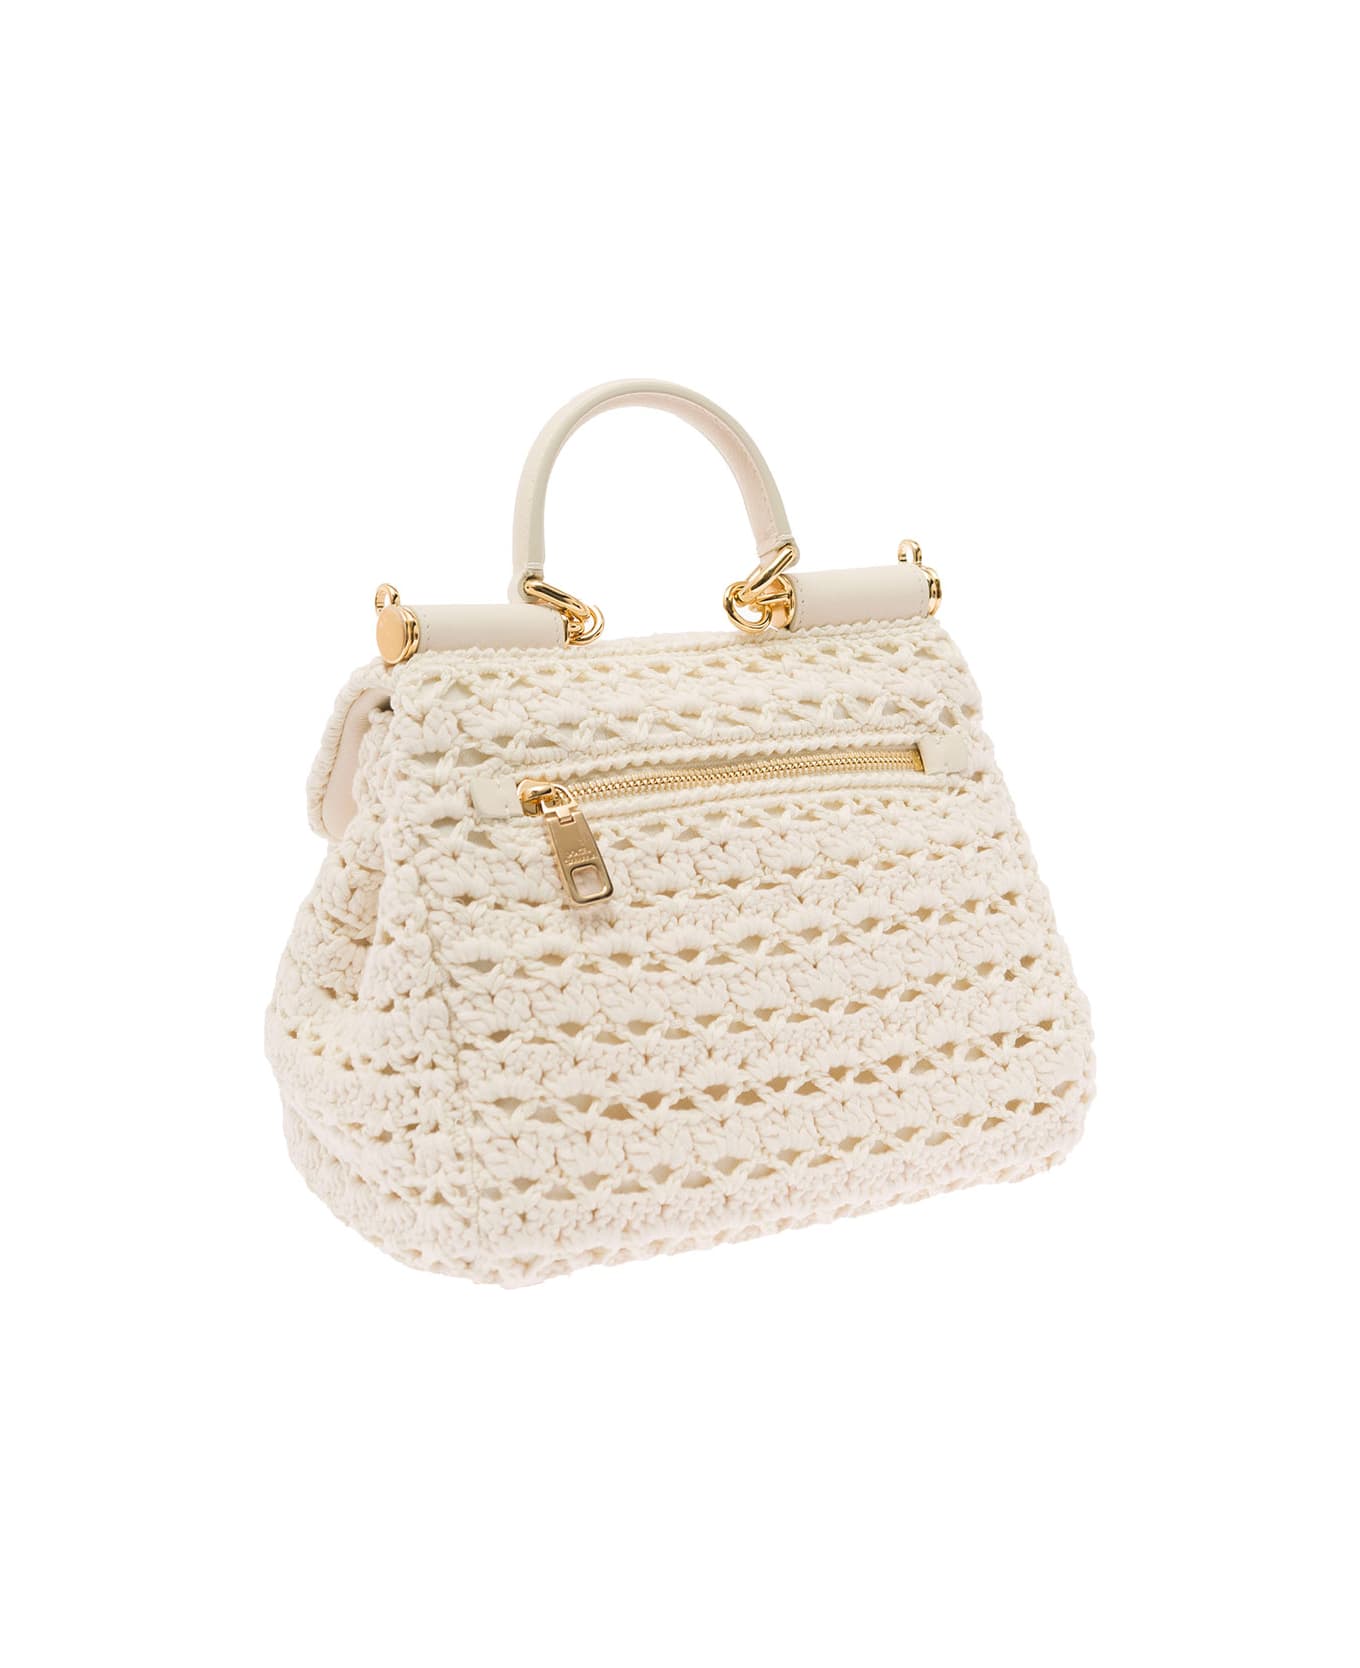 Dolce & Gabbana Sicily Small Handbag In White Crochet Woman - White トートバッグ